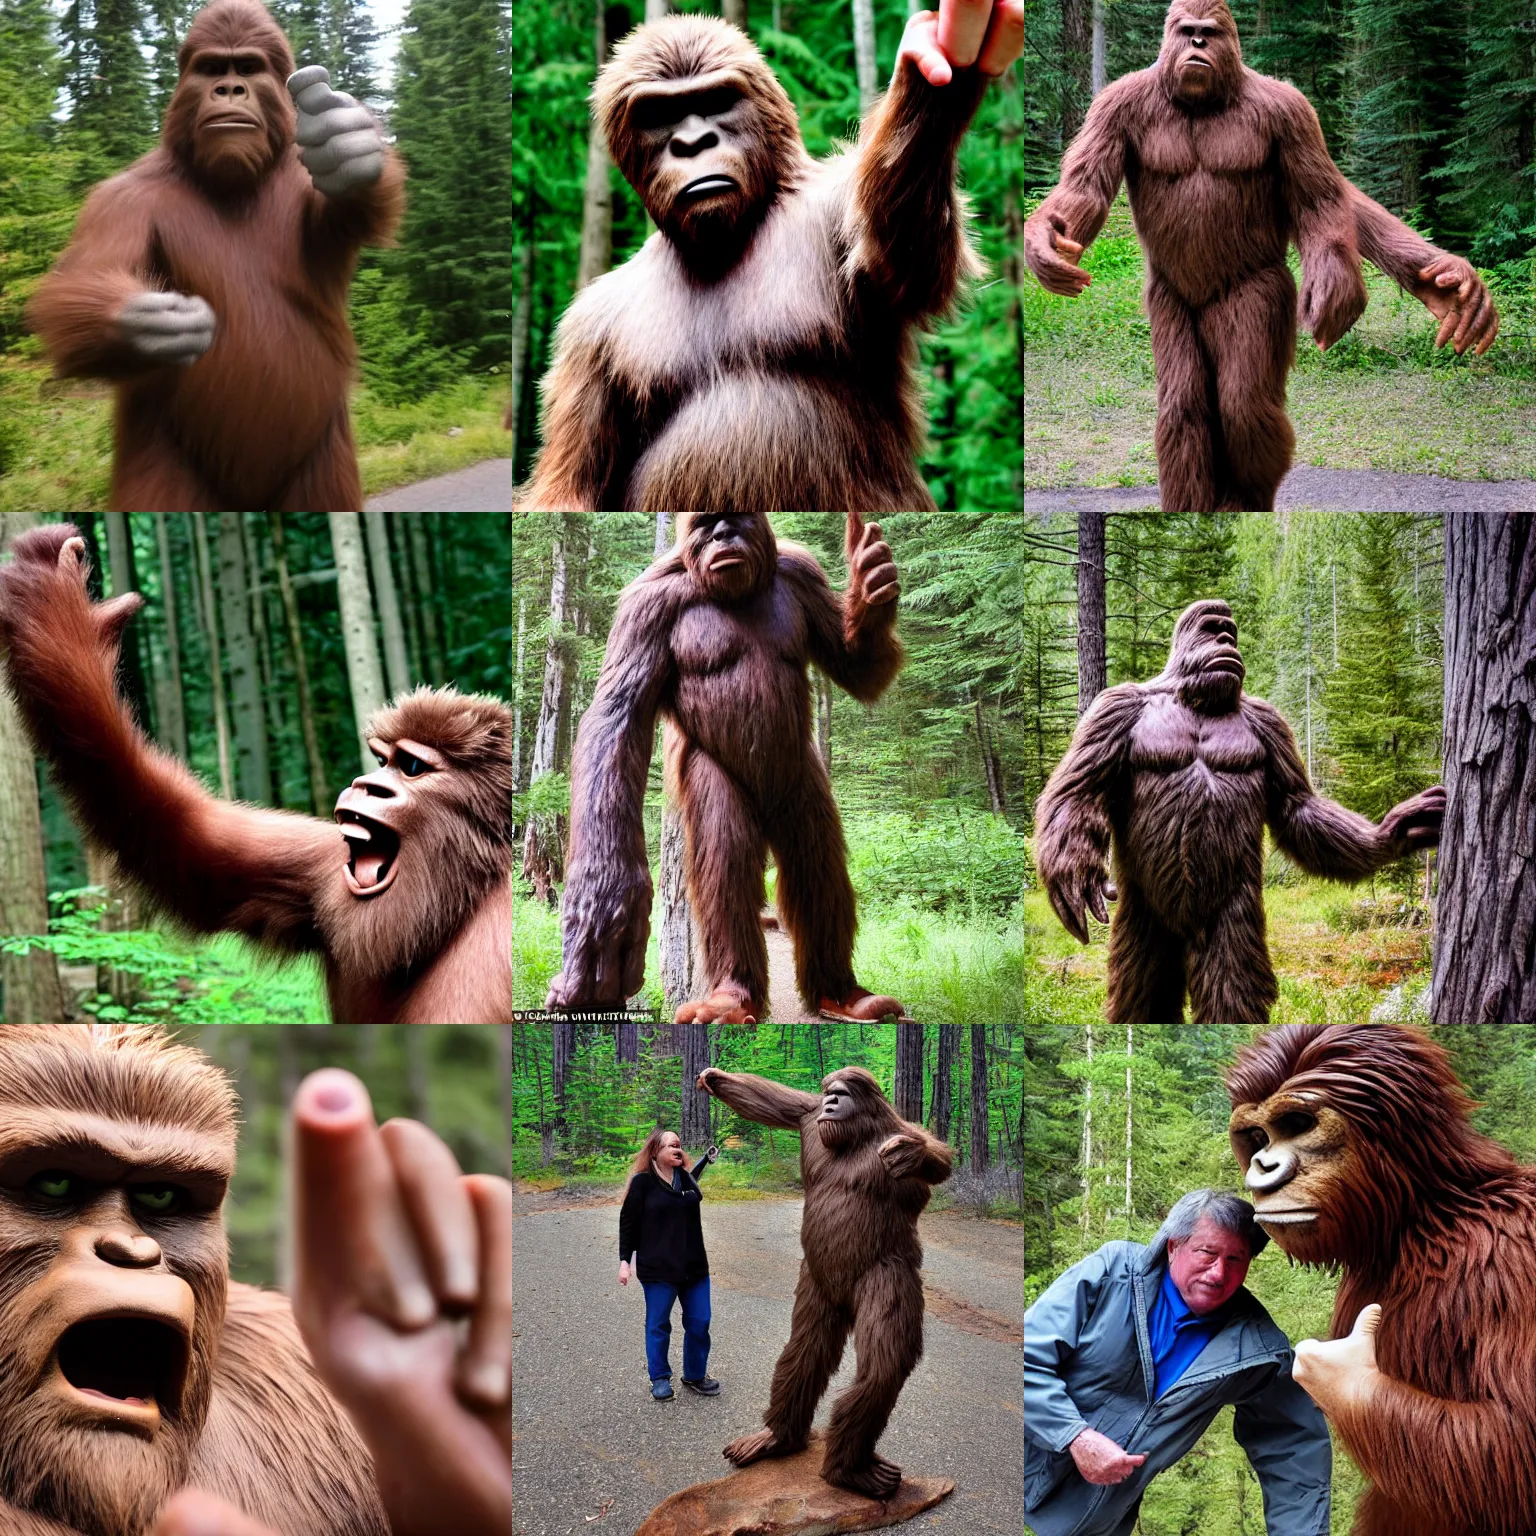 Prompt: Bigfoot giving the finger to a tourist named Karen, photo, sharp focus